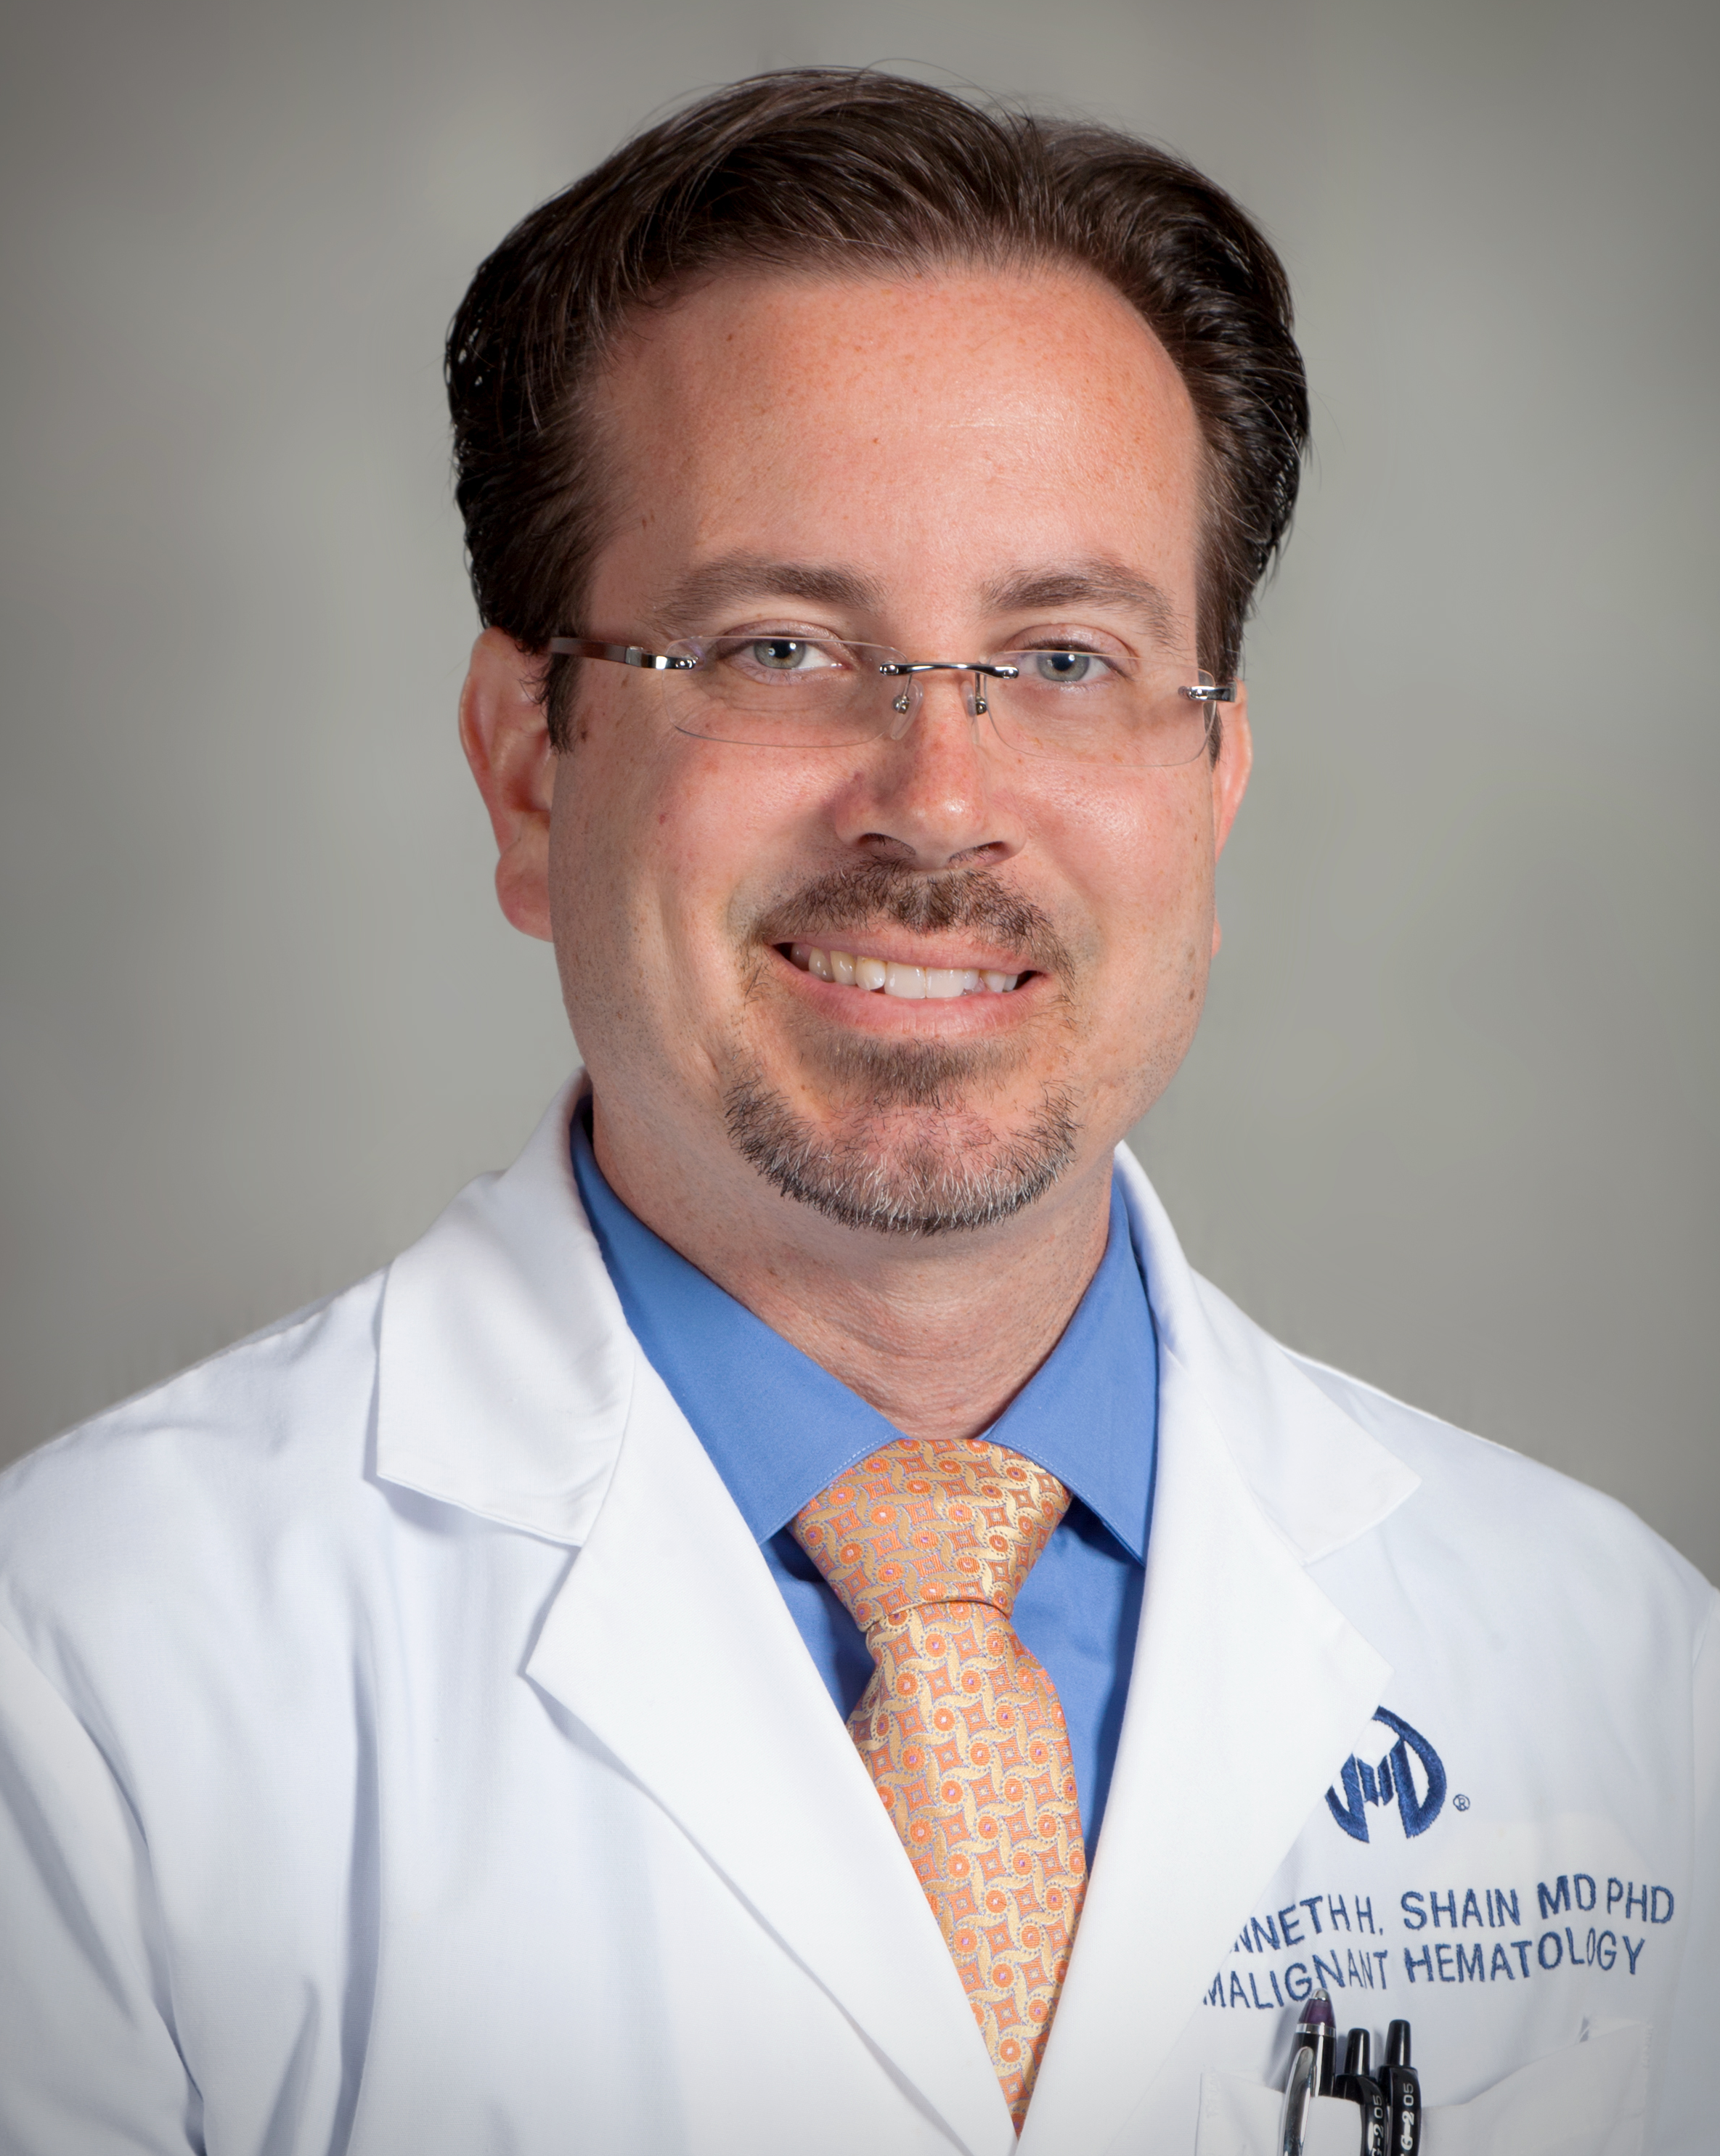 Kenneth Shain, MD, PhD | Image credit: H. Lee Moffitt Cancer Center